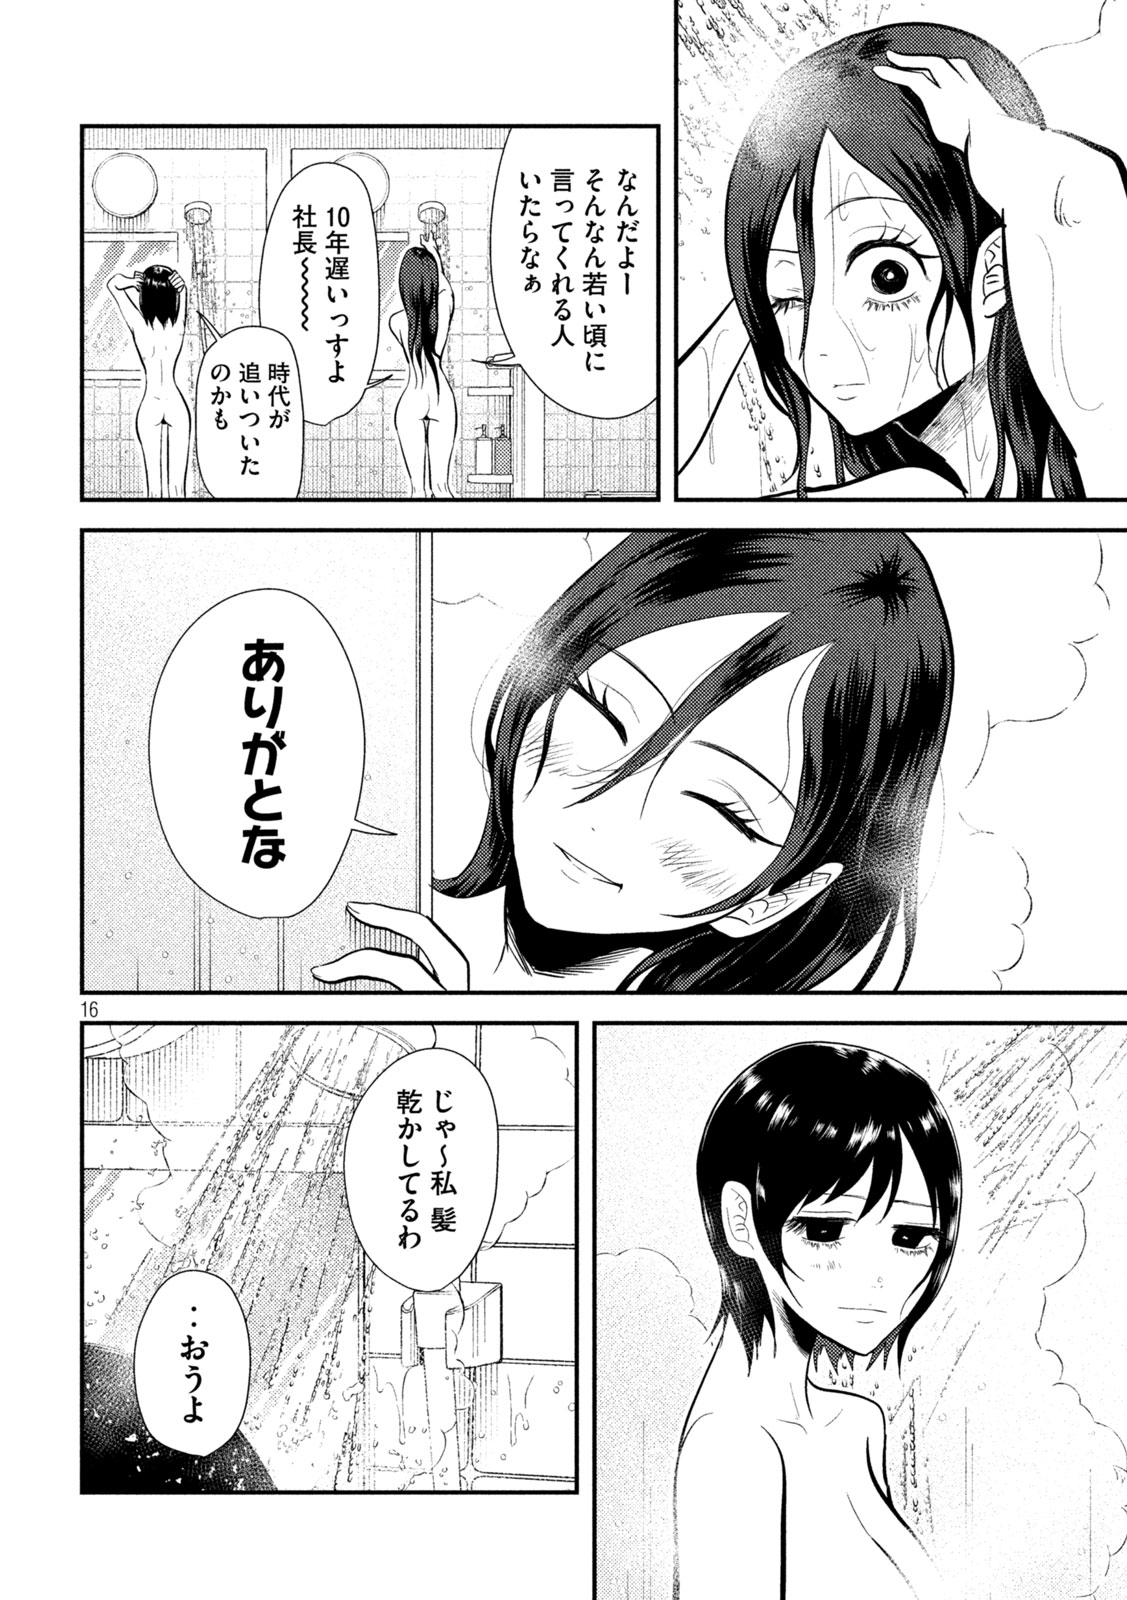 Heisei Haizanhei Sumire-chan - Chapter 10 - Page 16